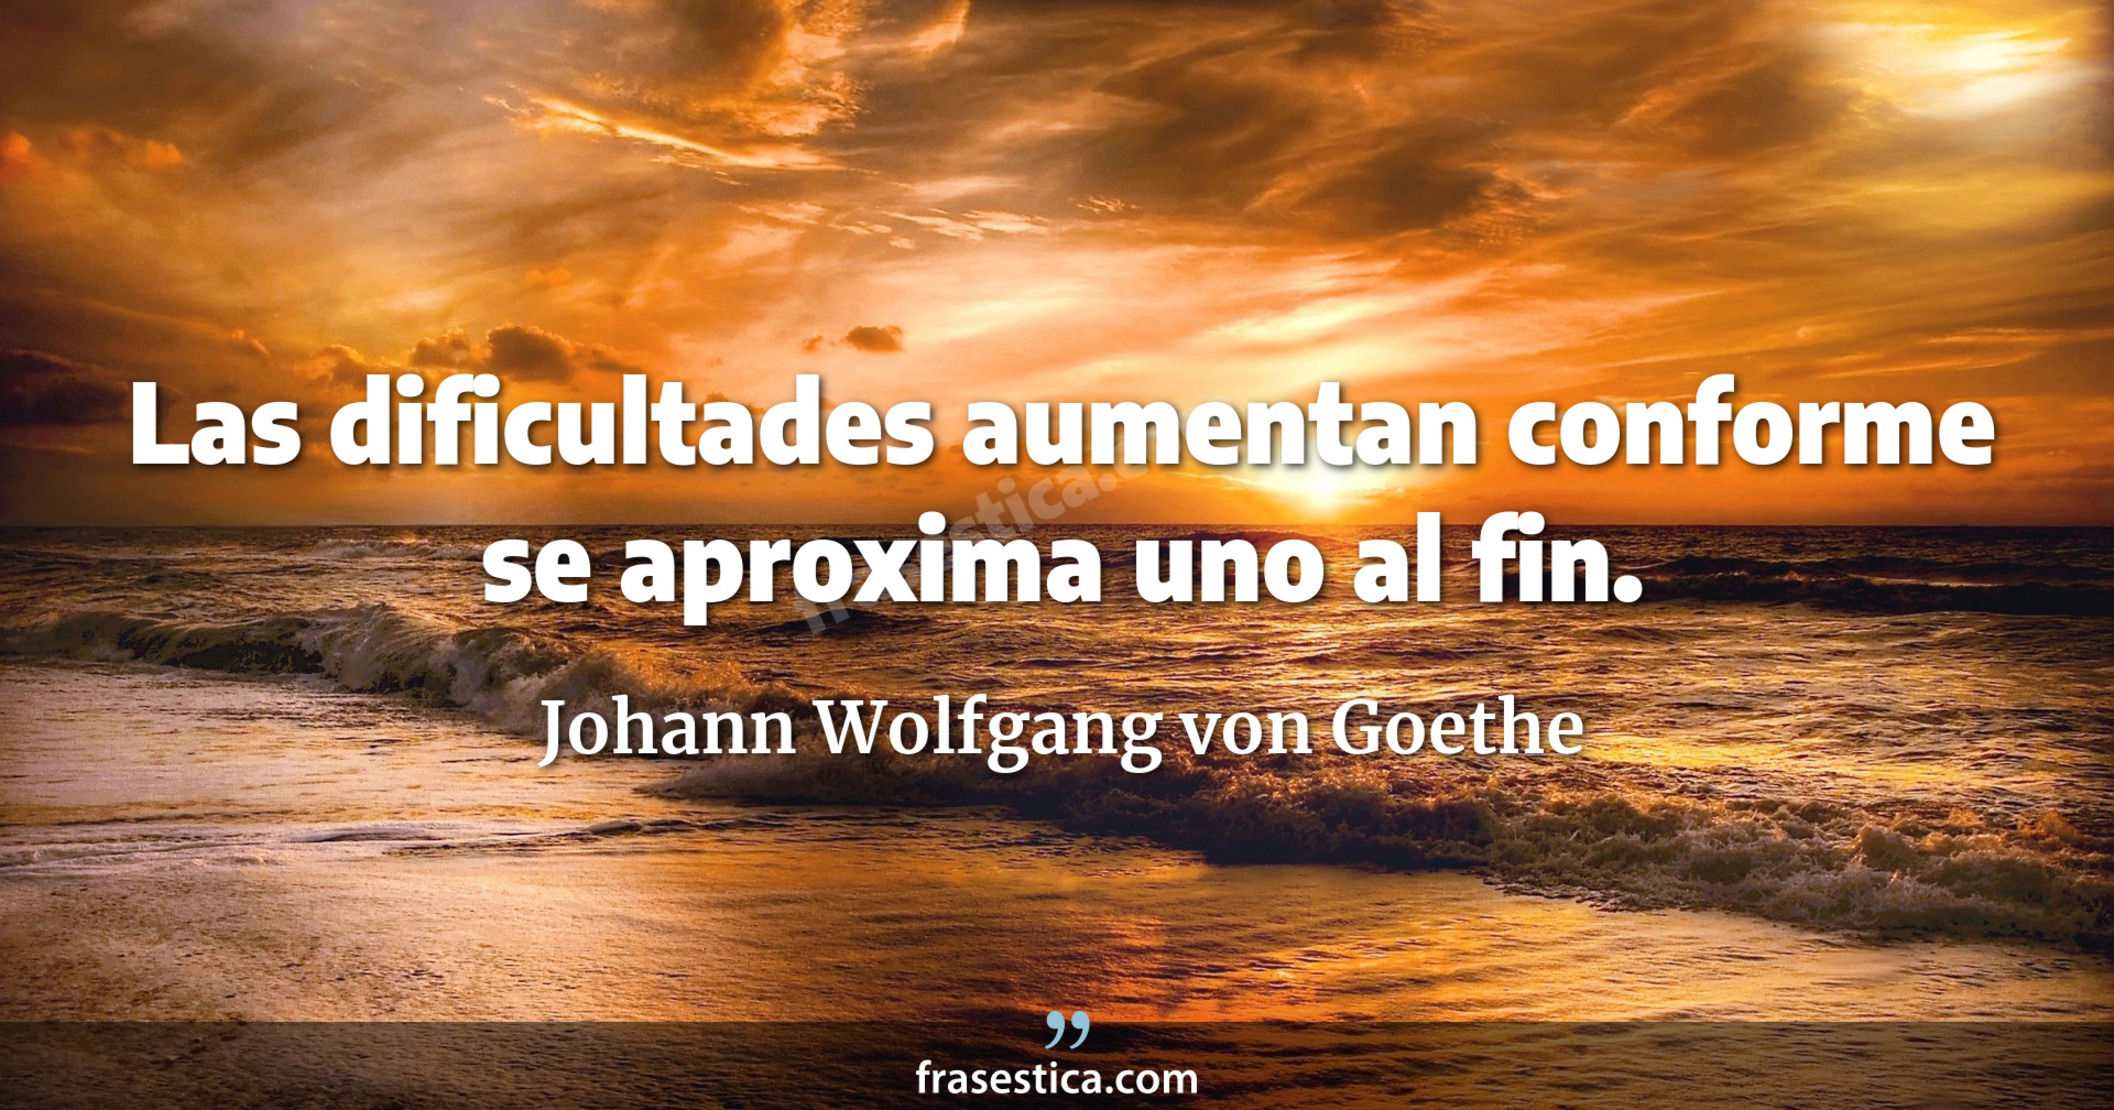 Las dificultades aumentan conforme se aproxima uno al fin. - Johann Wolfgang von Goethe